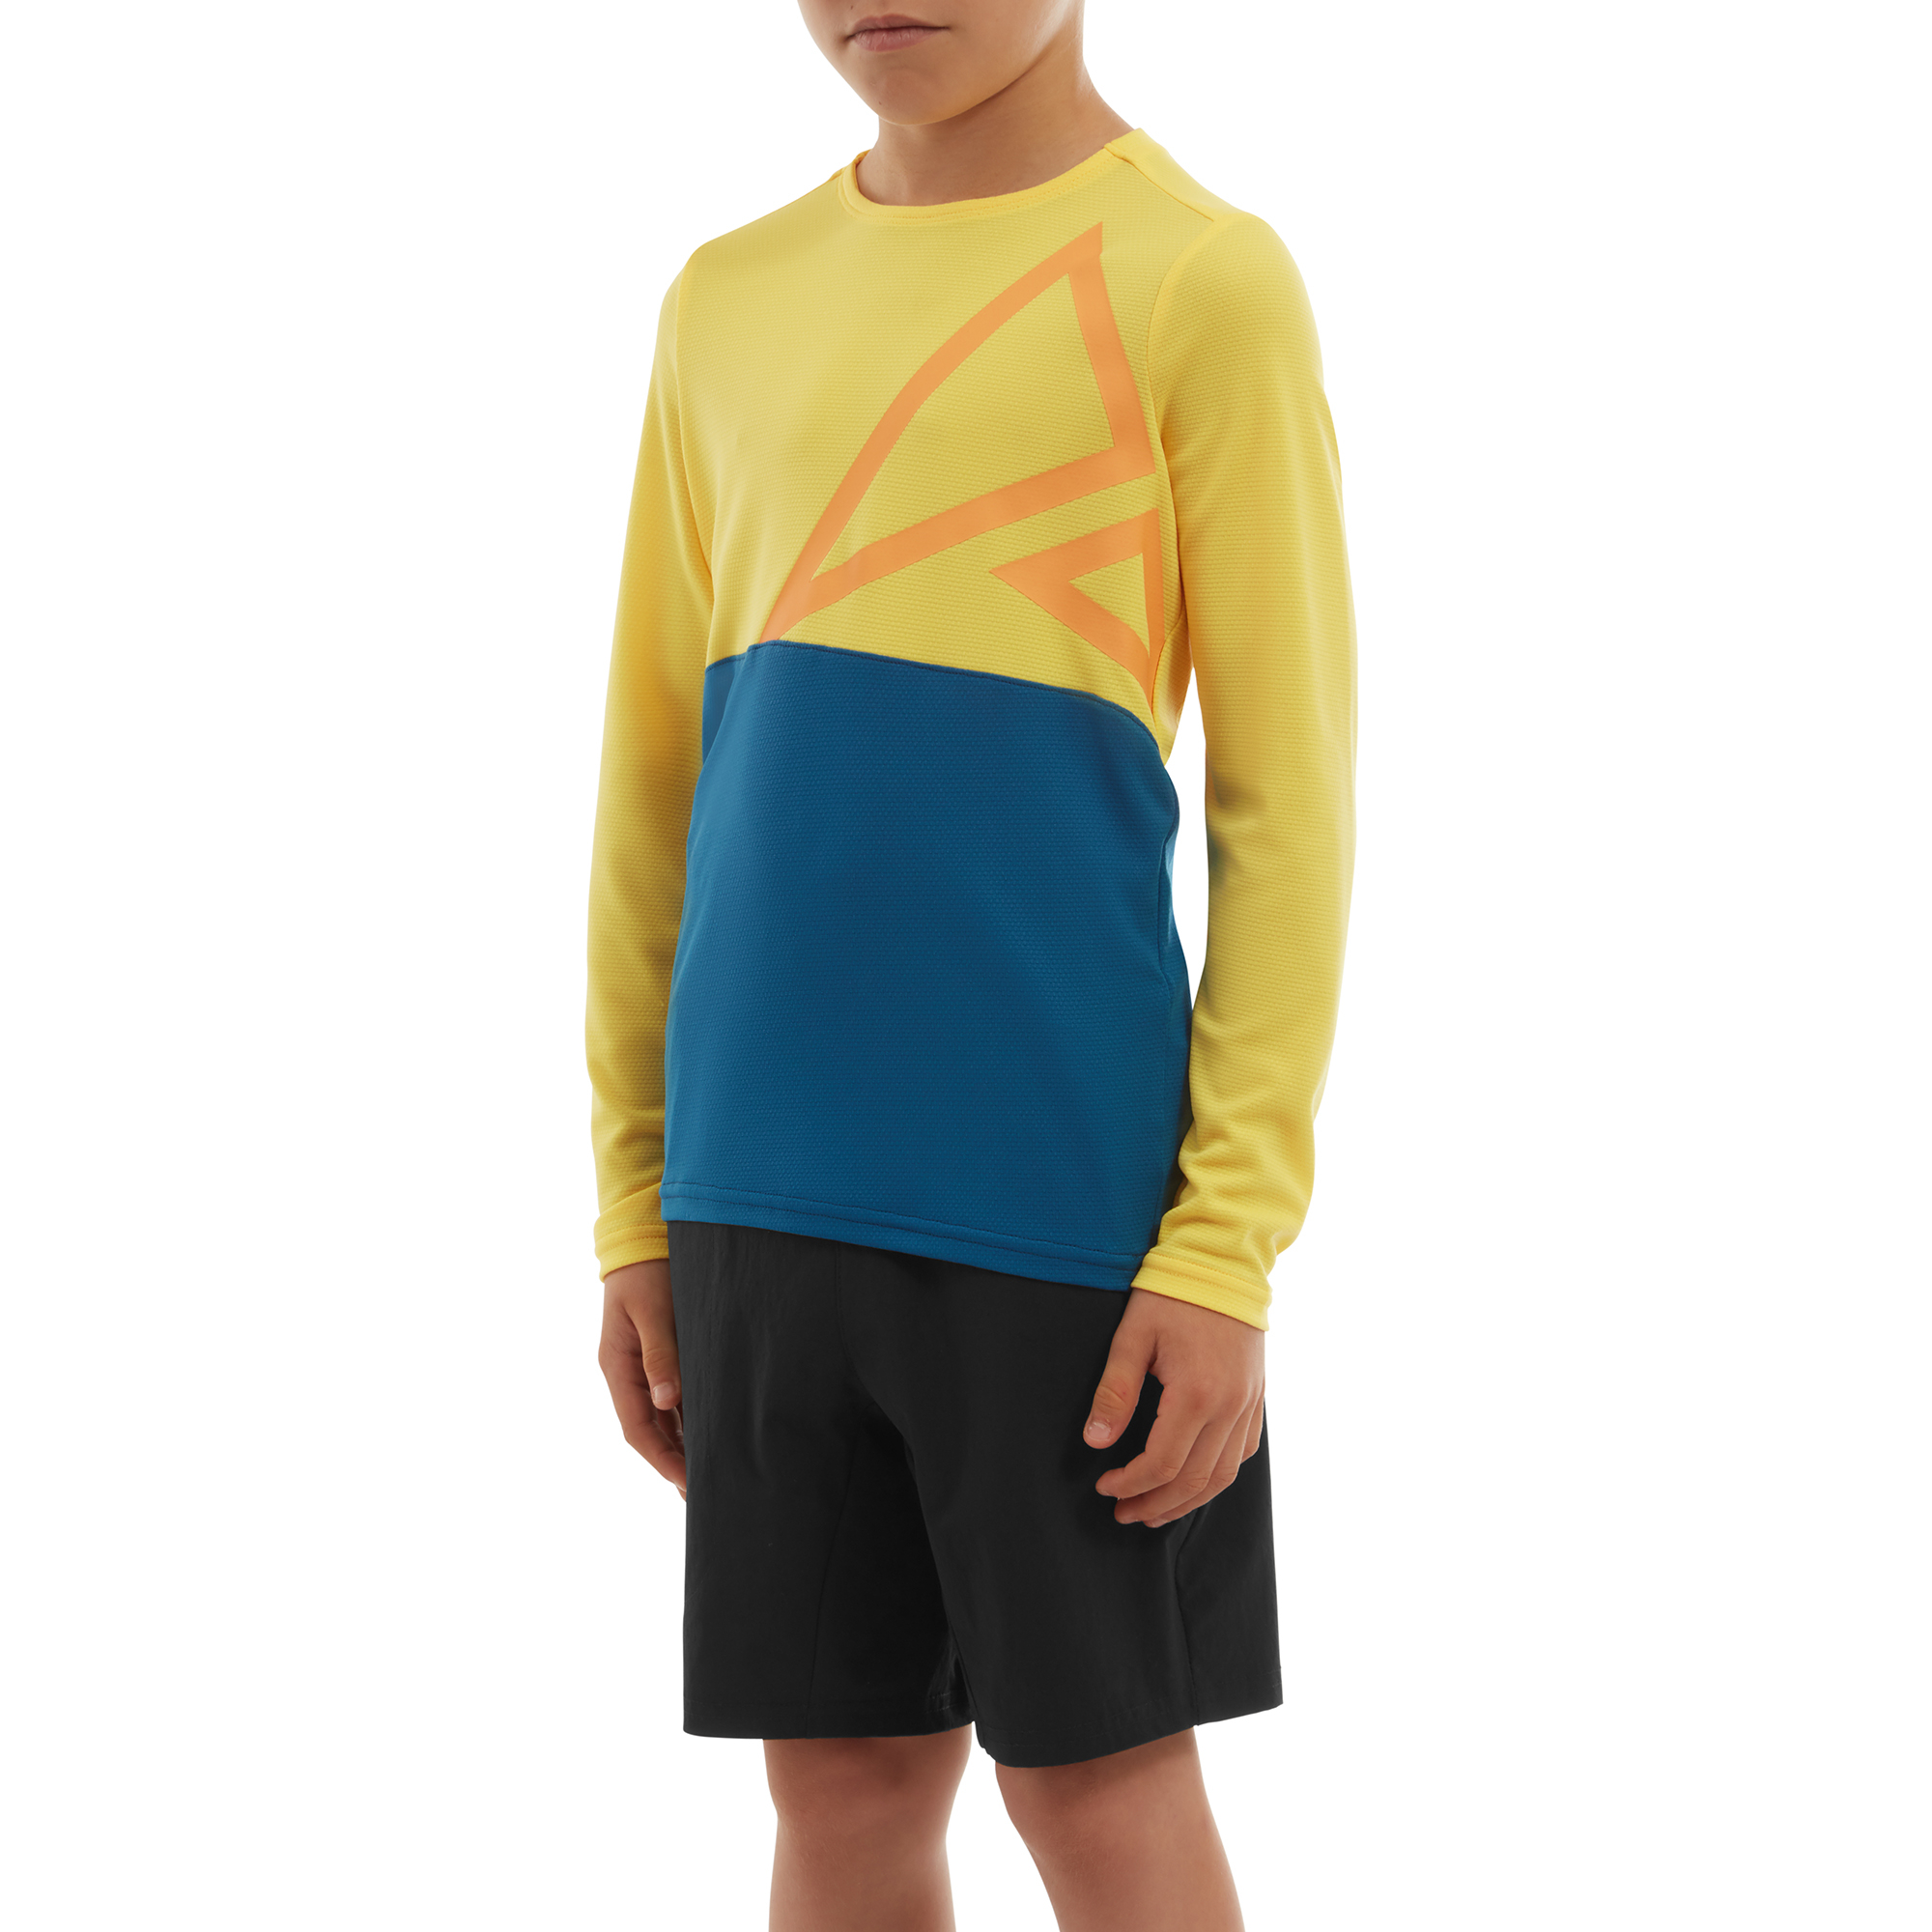 Altura  Spark Lightweight Kids Long Sleeve Jersey 9 to 10 Years YELLOW/BLUE